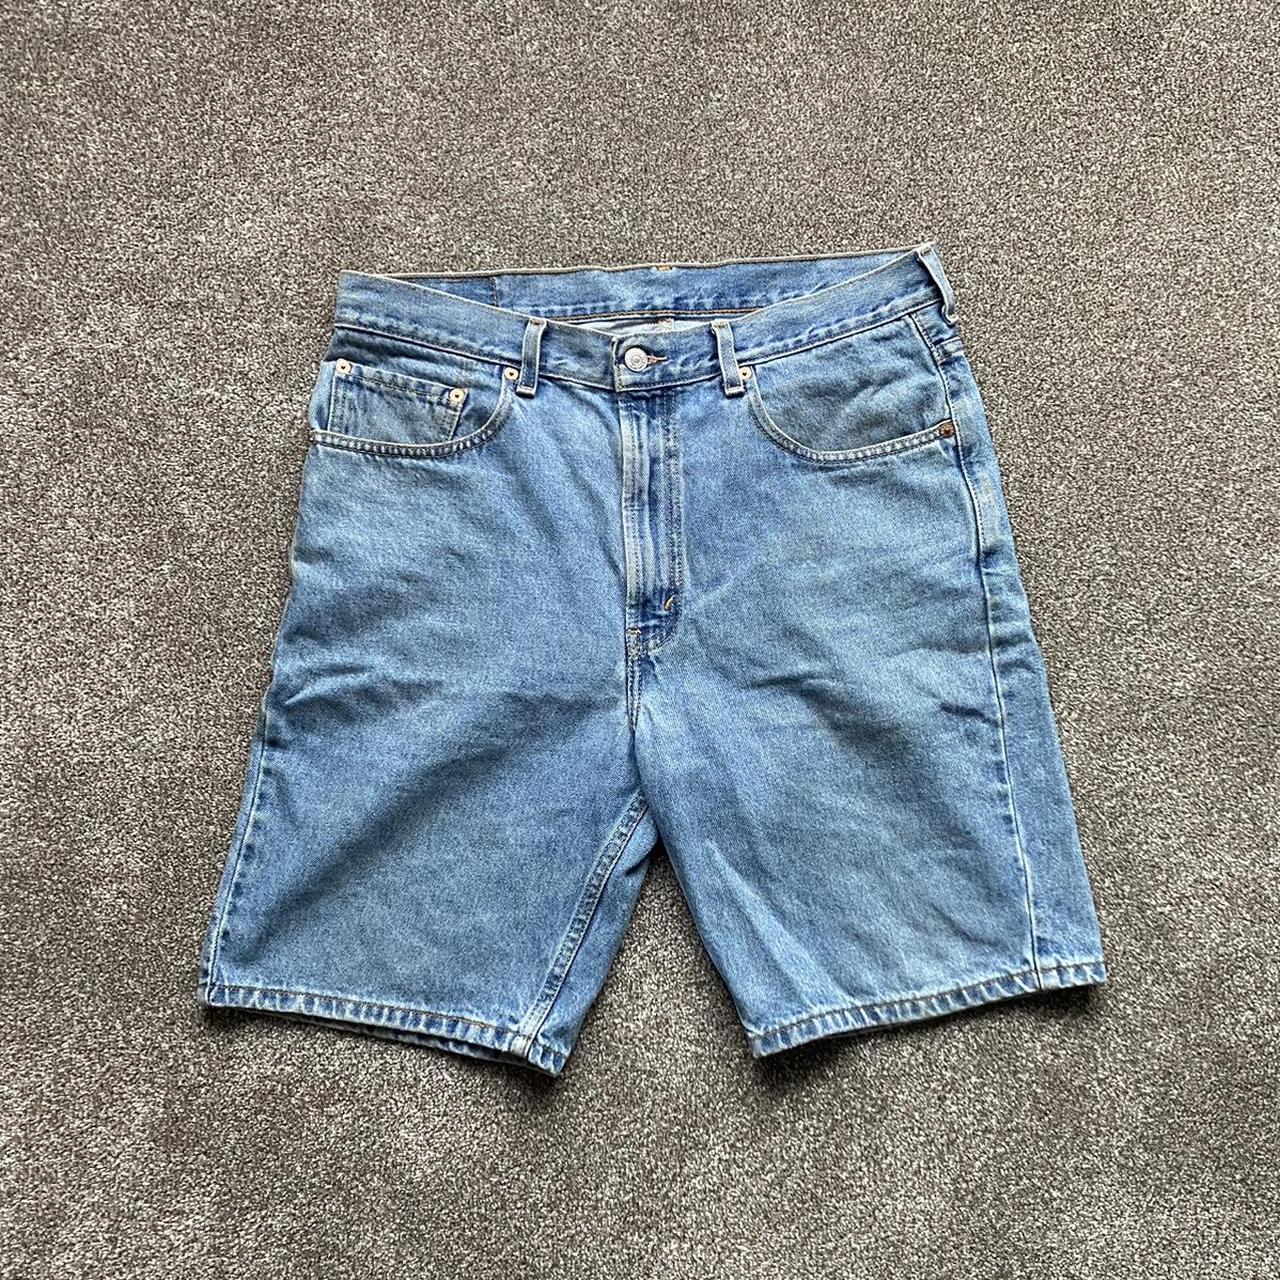 Levi’s 505 denim jean shorts Light blue 34W 9inch... - Depop